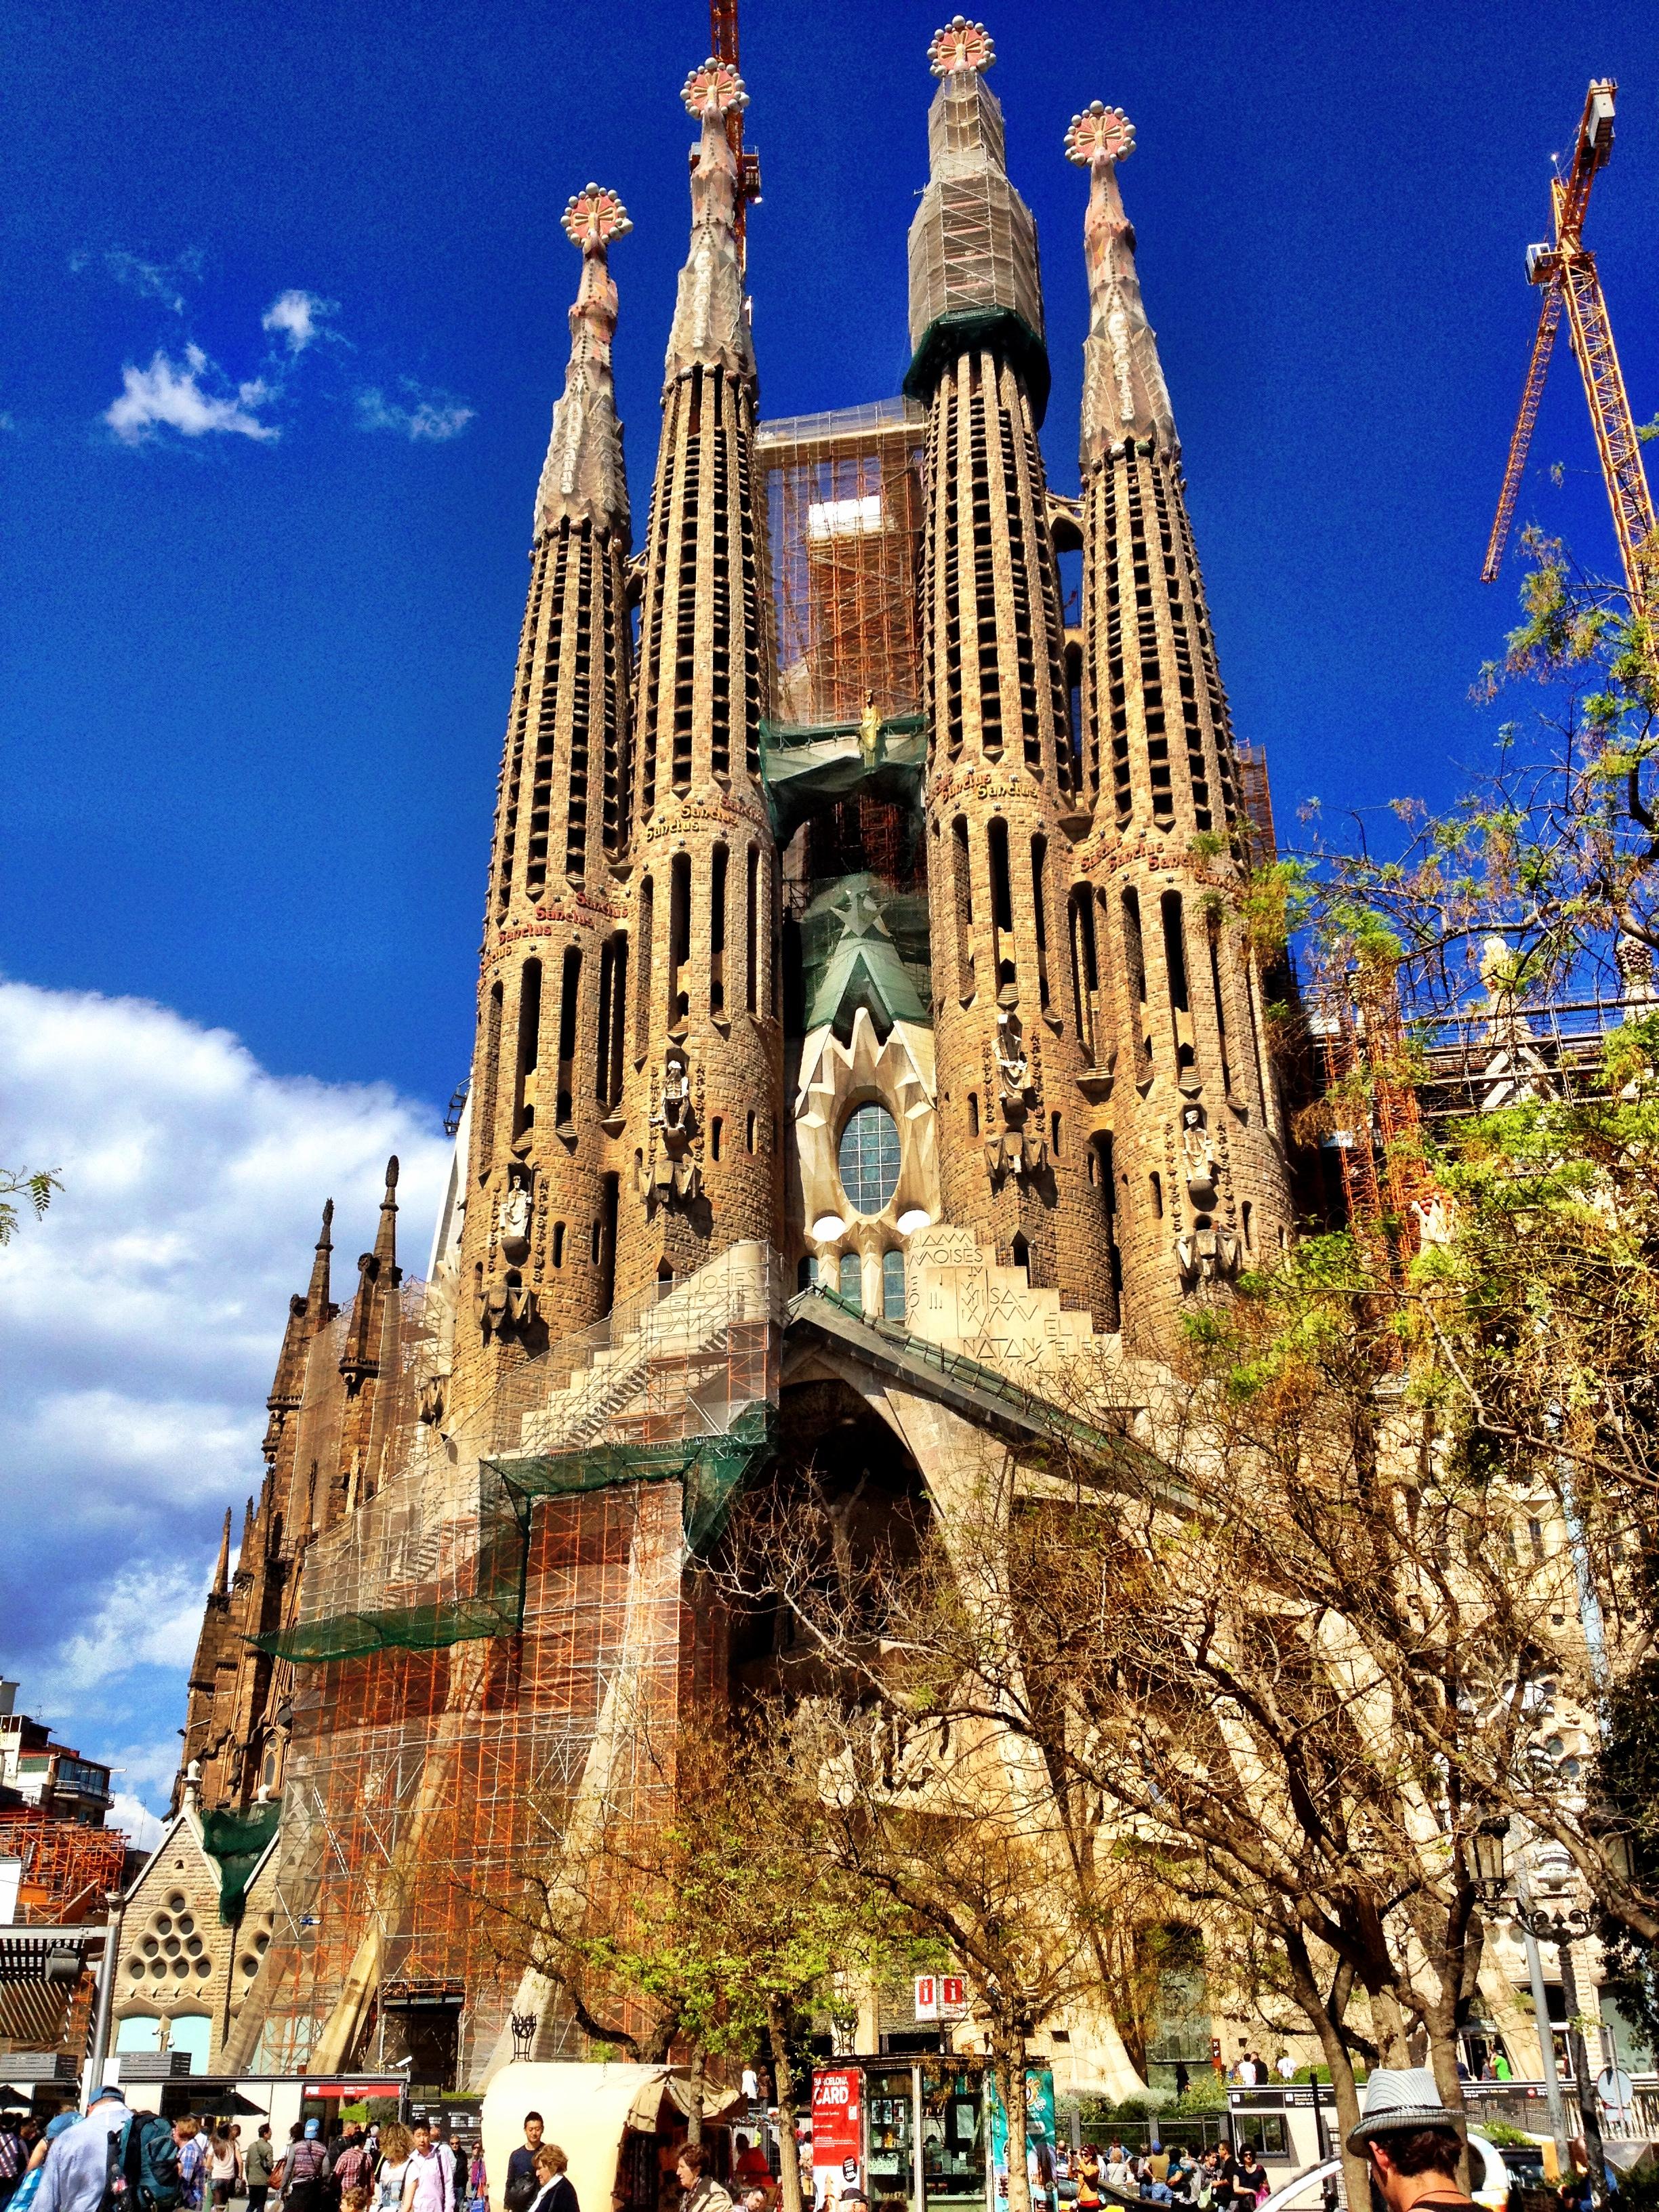 La Sagrada Familia. the world is at your feet